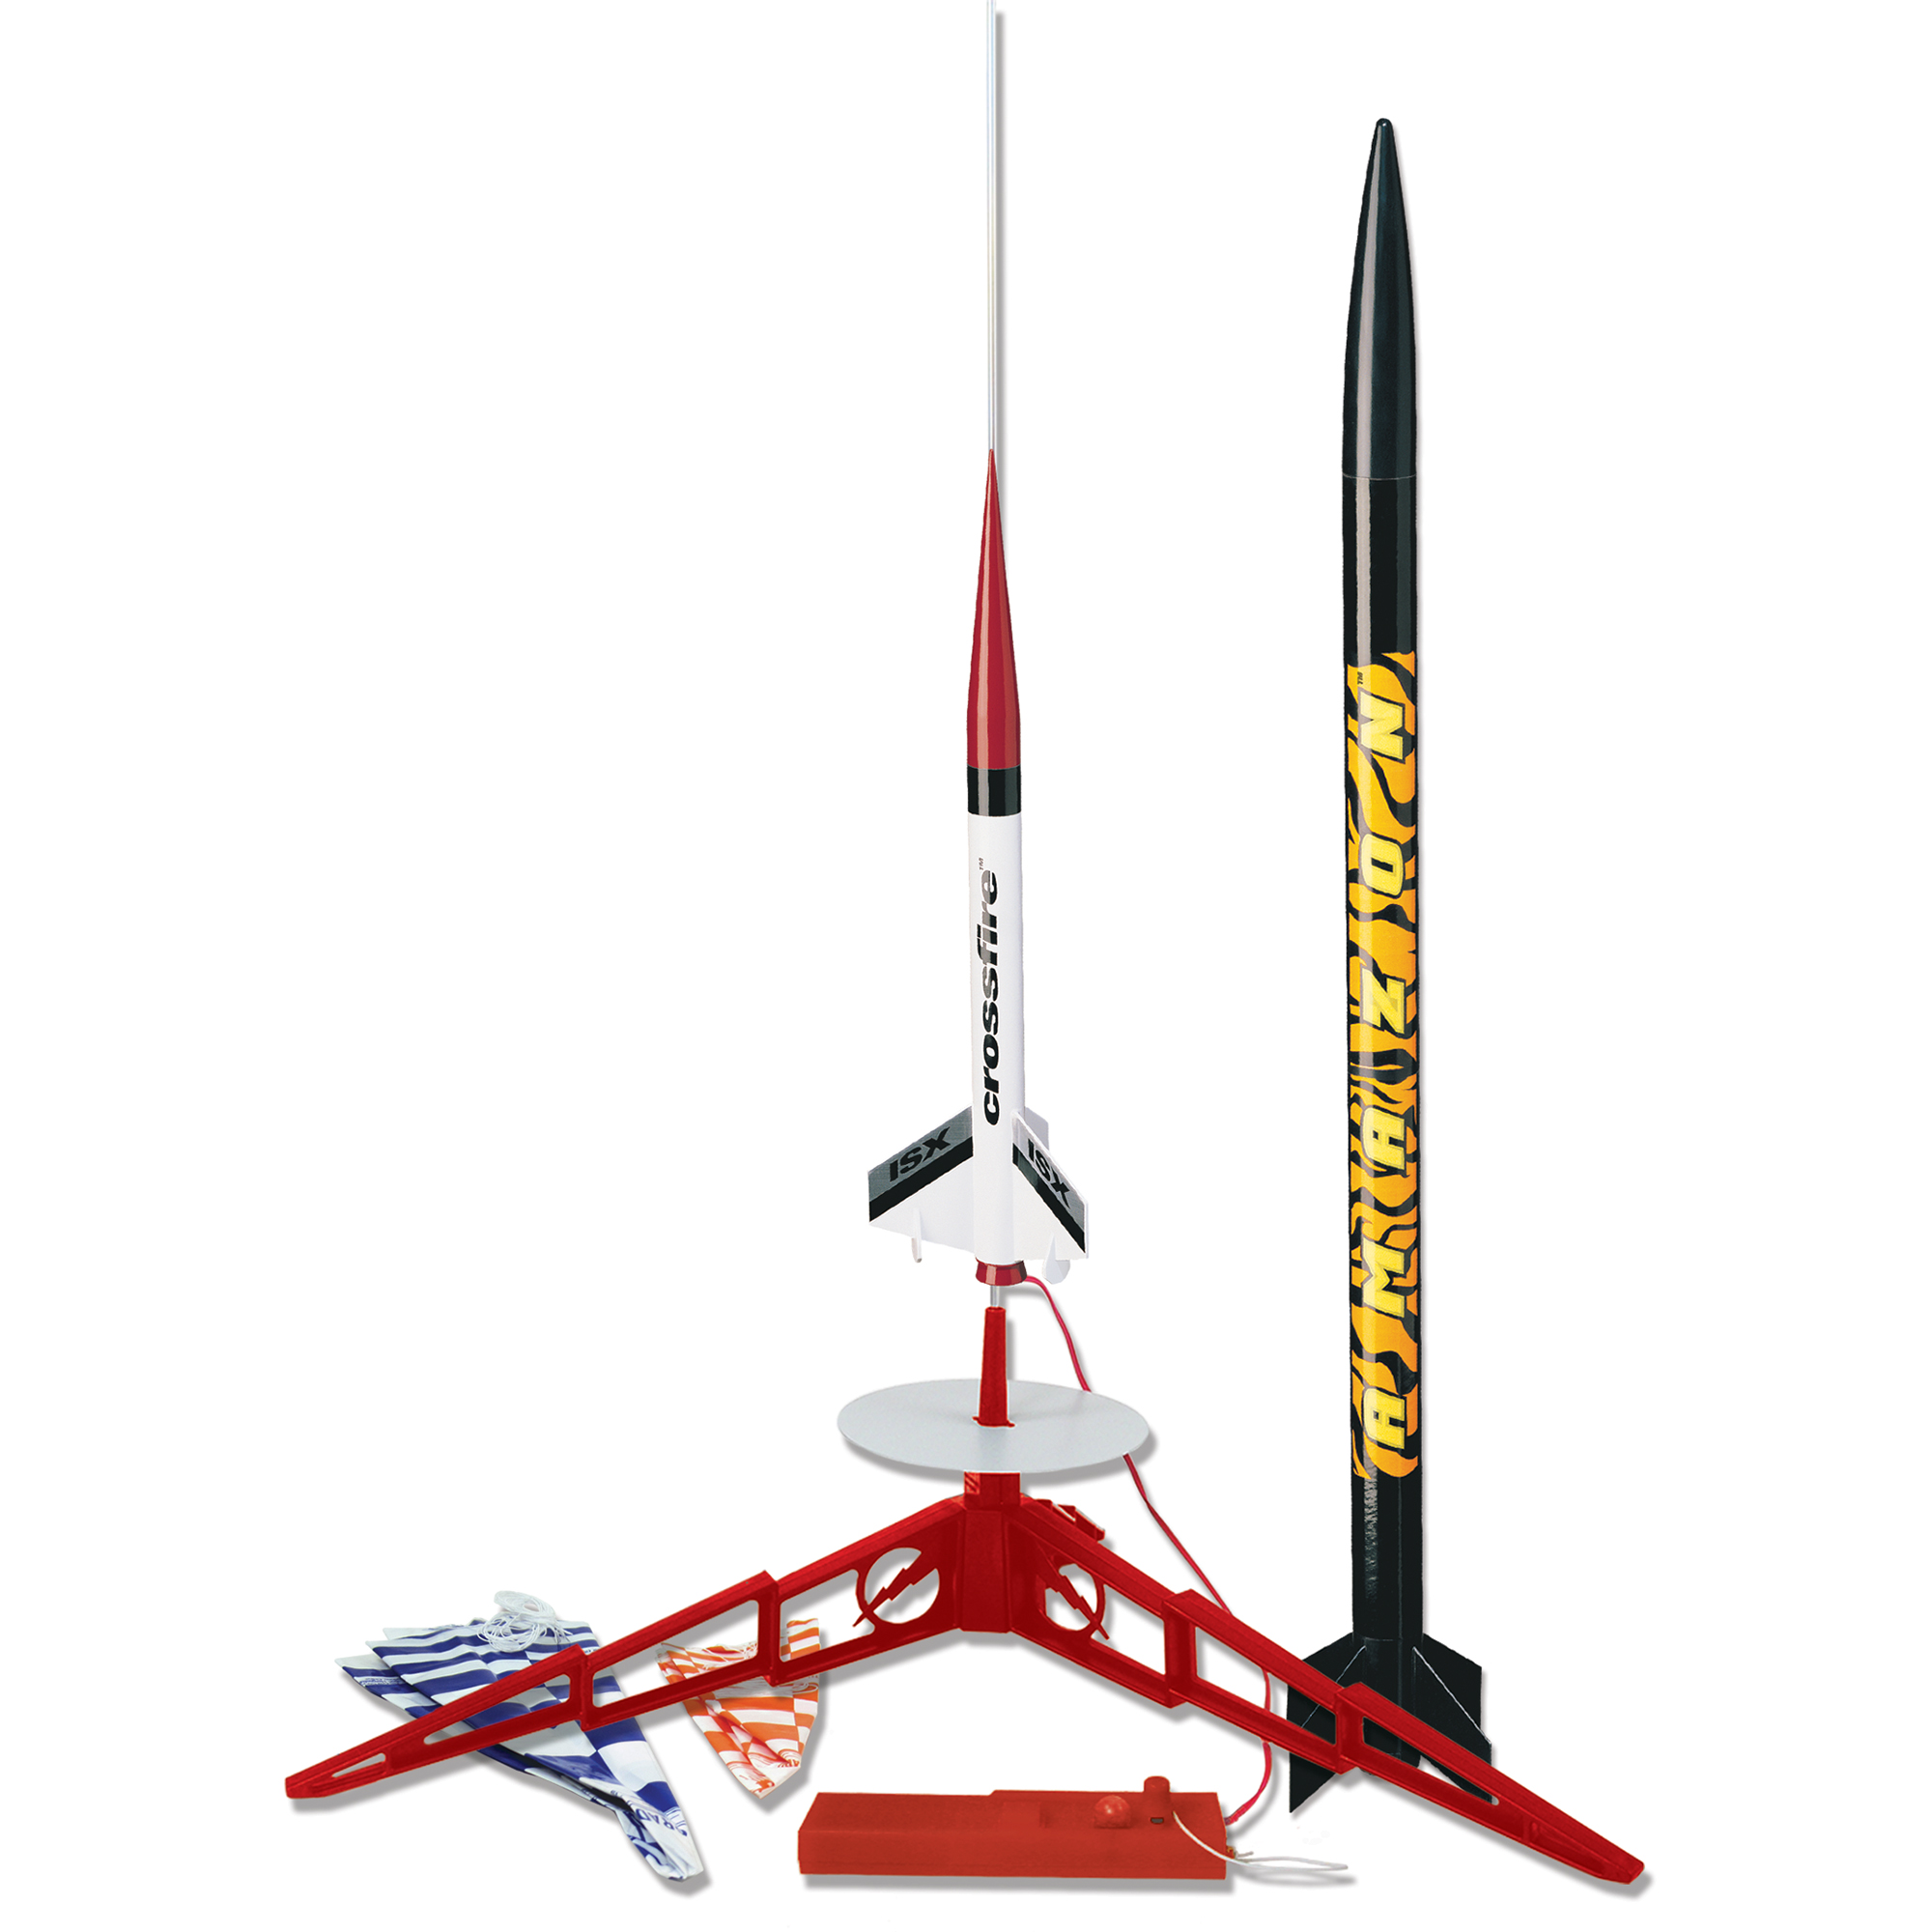 Estes Tandem-X Flying Model Rocket Launch Set - image 1 of 3